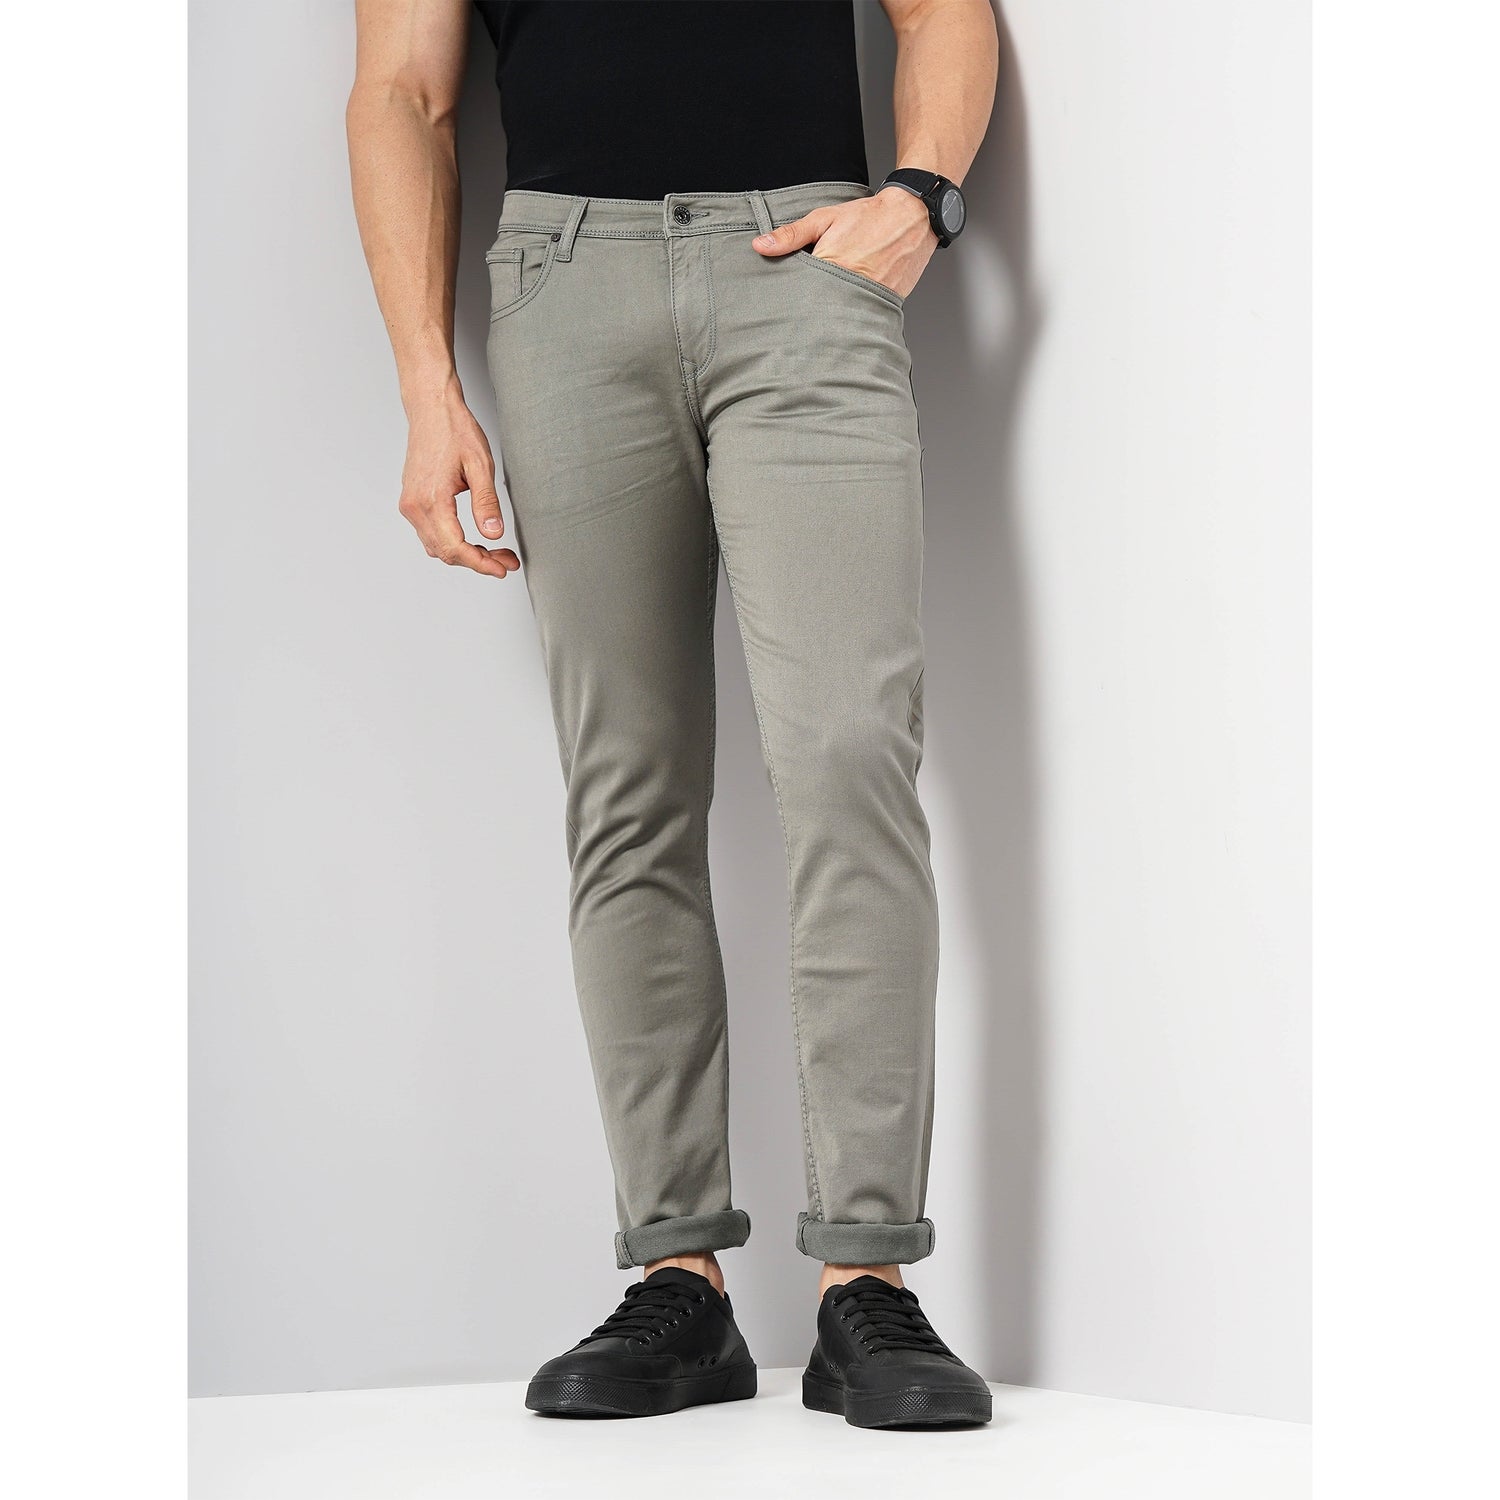 Men Grey Solid Slim Fit Cotton Colored Denim Jeans (GOSHADE25)